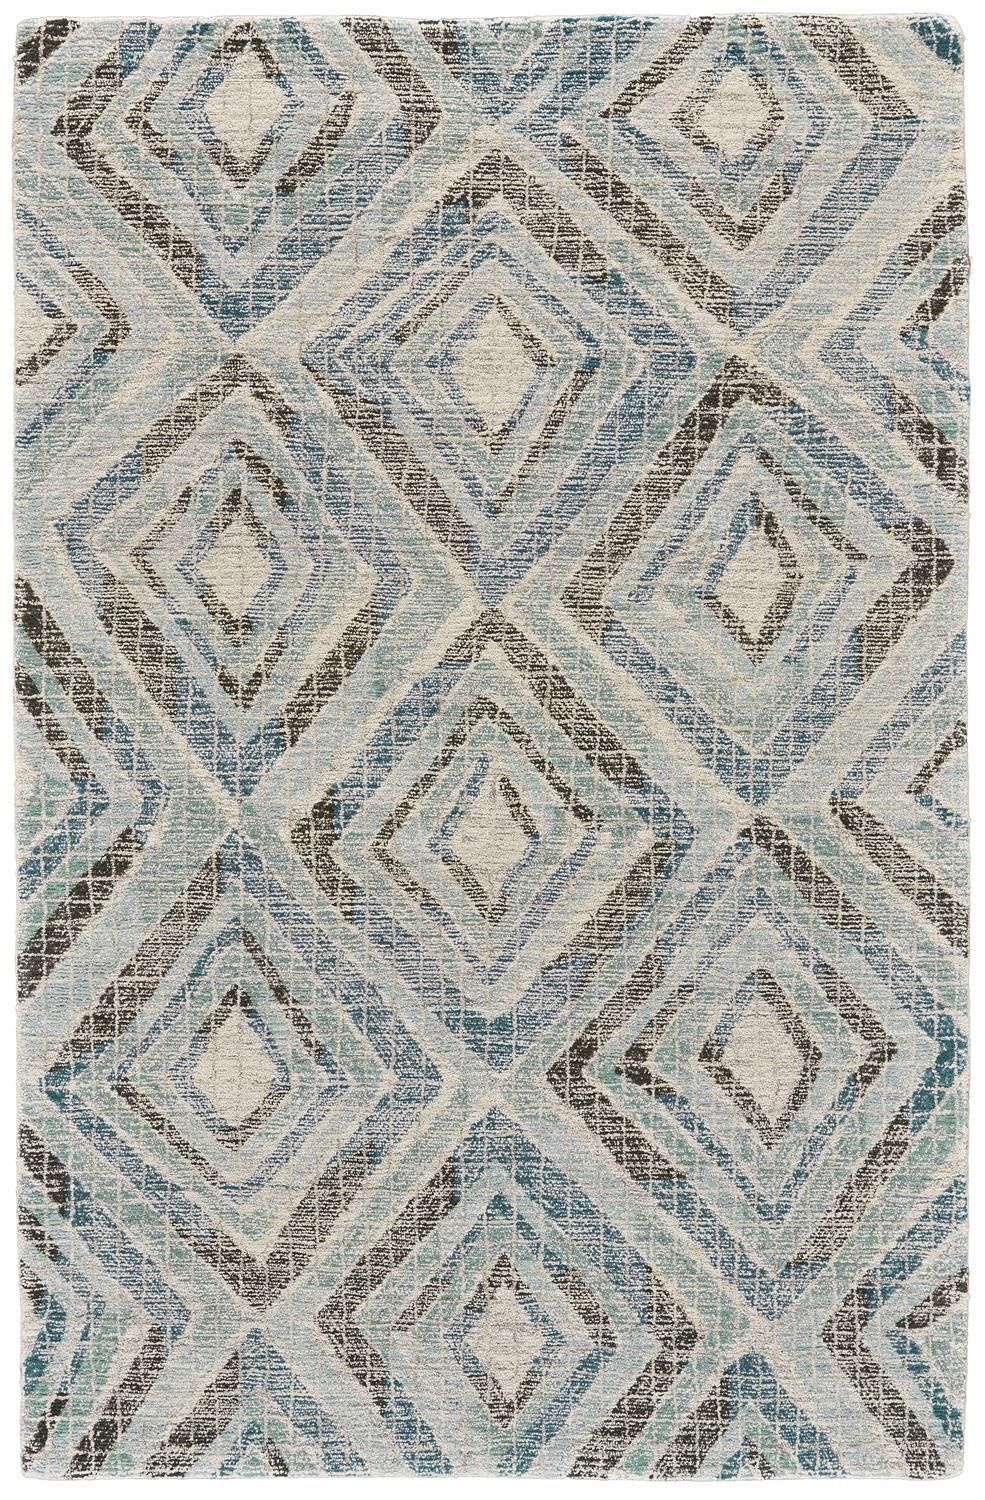 Blue Gray And Ivory Wool Geometric Tufted Handmade Area Rug - 4' x 6'